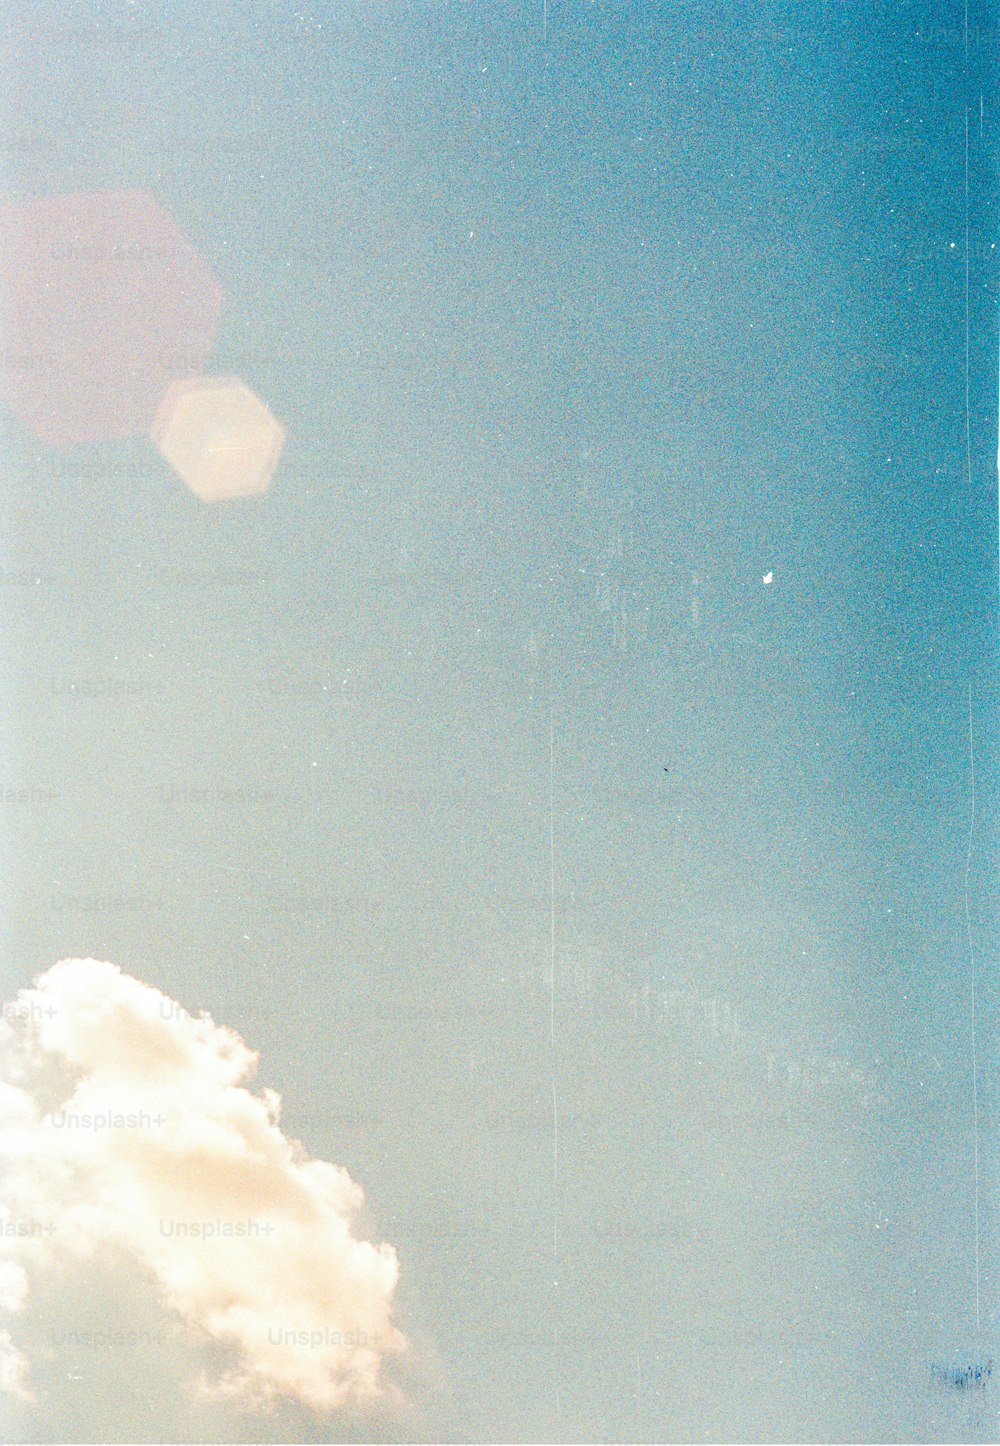 un avión volando a través de un cielo azul con nubes